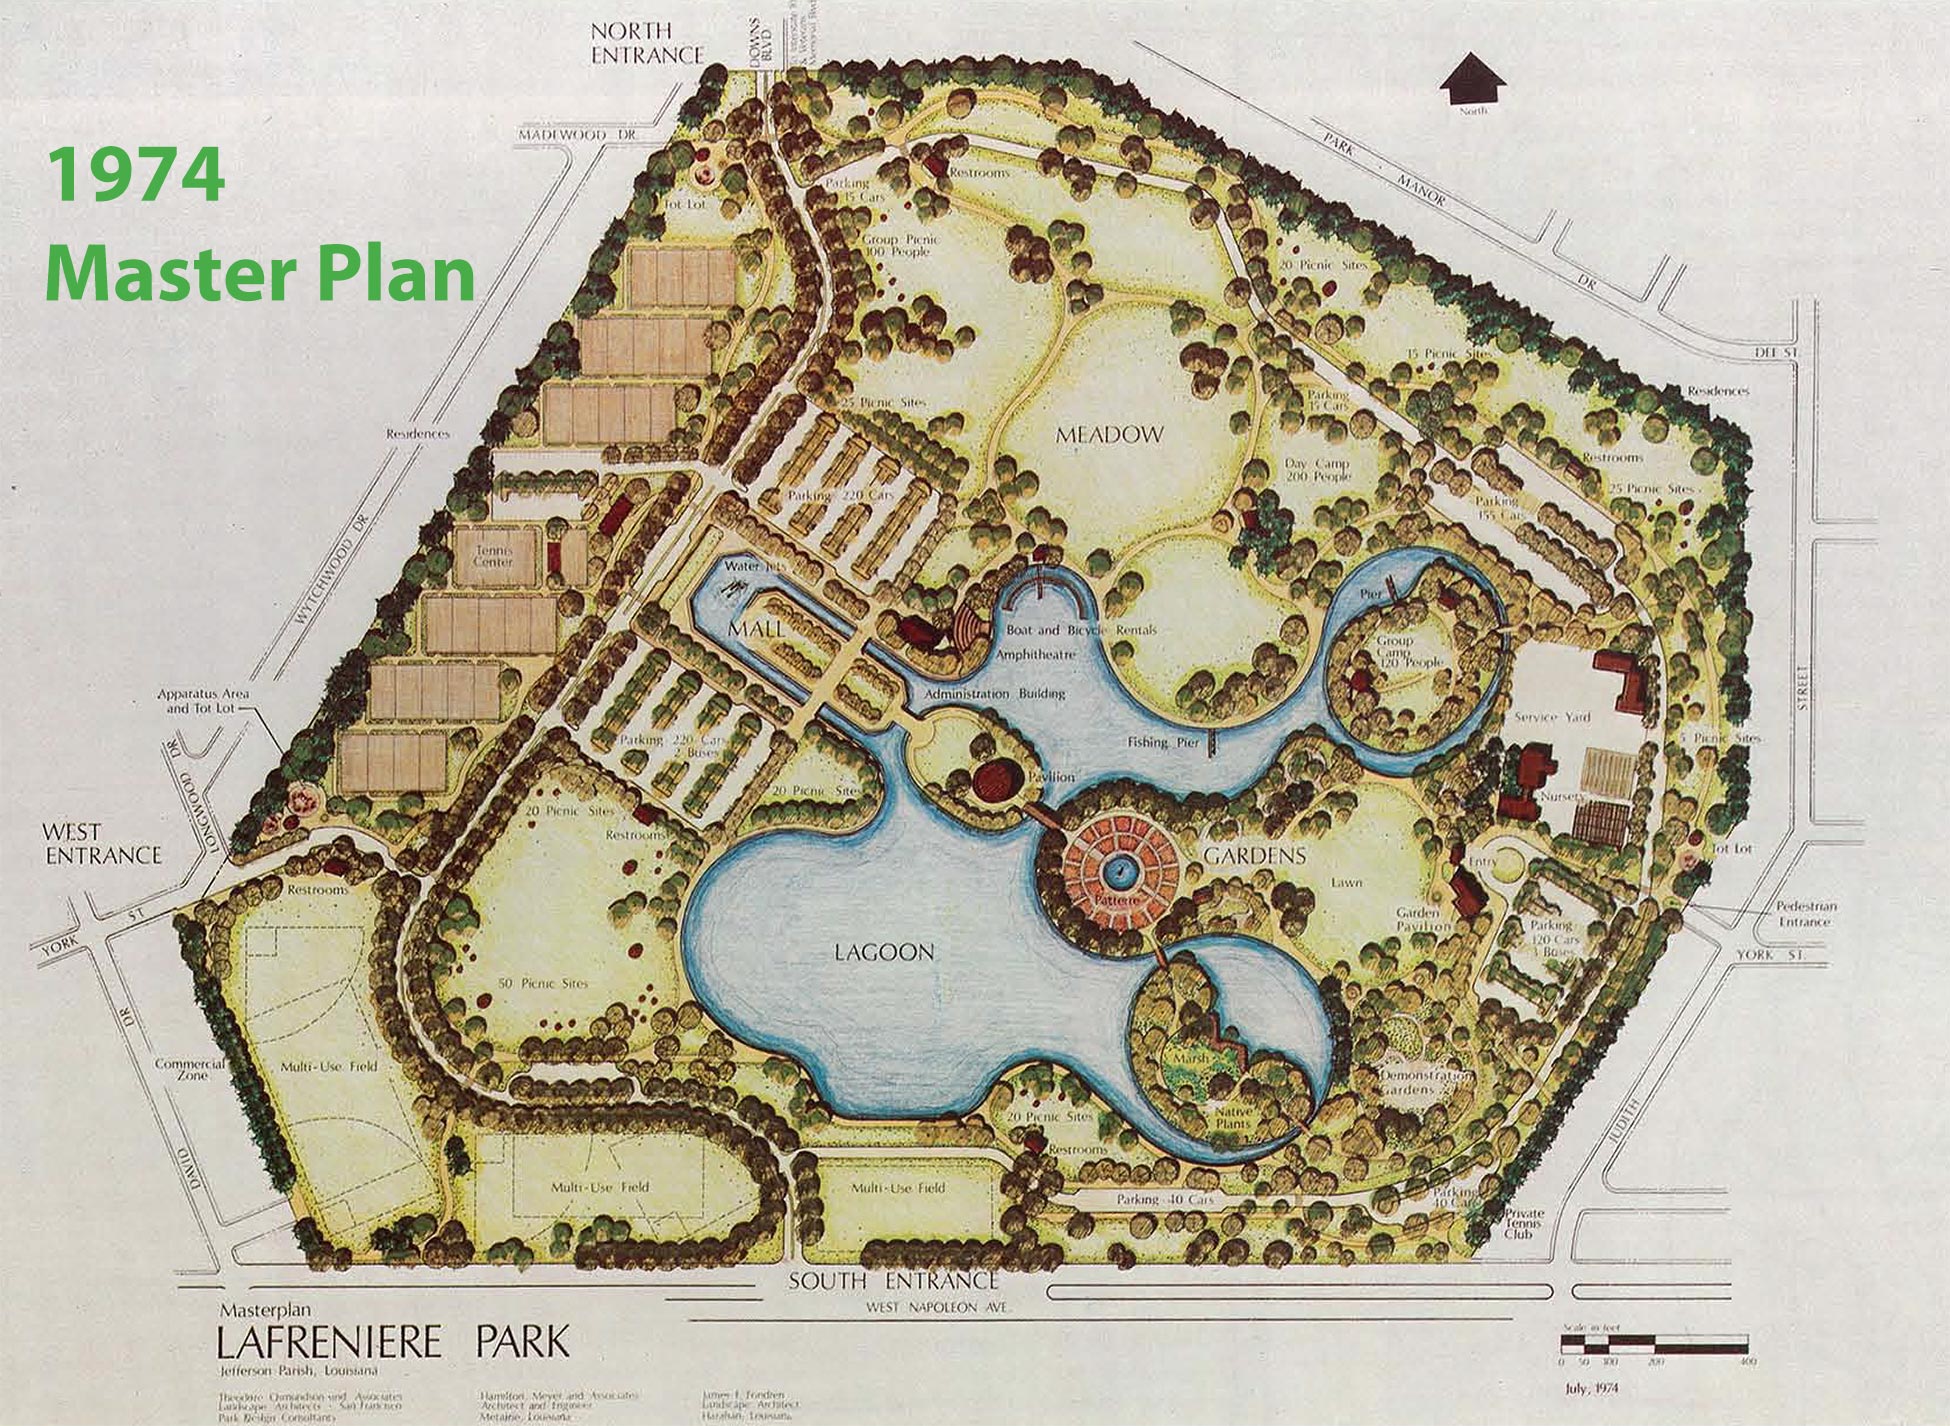 Lafreniere Park 1974 Master Plan